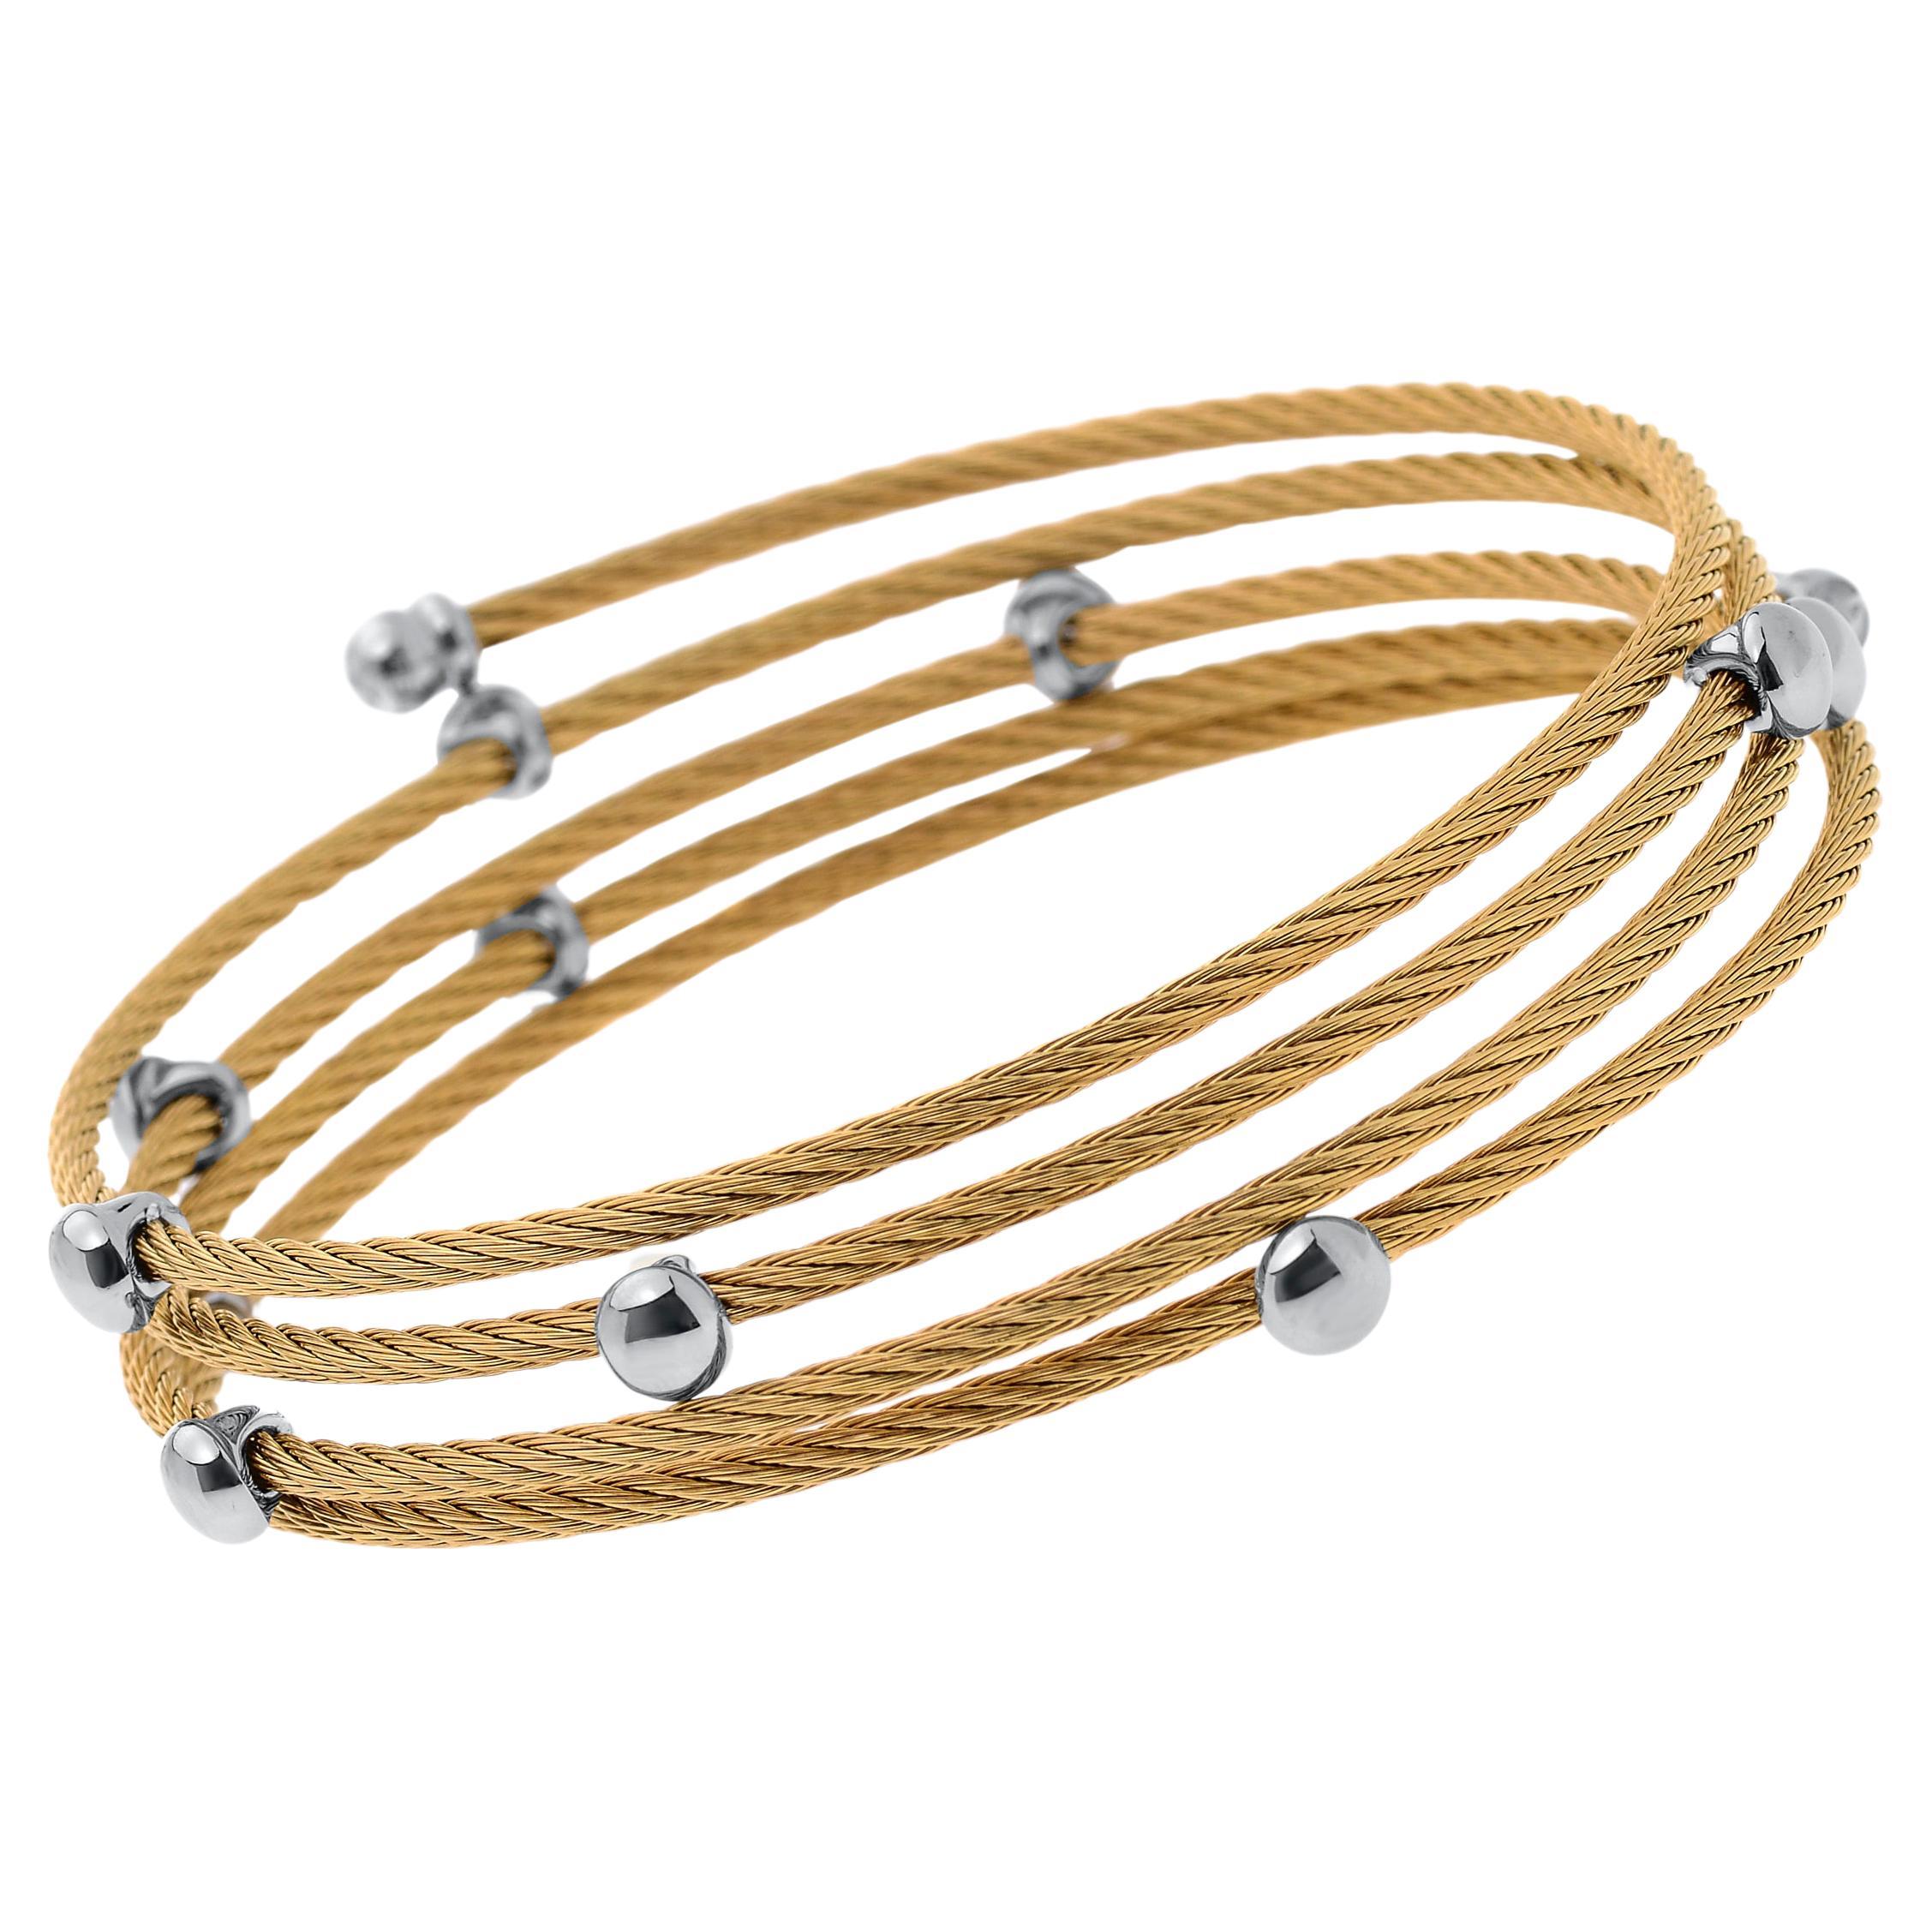 Alor Grey Cable Triple Strand Bracelet with 18kt White Gold & Diamonds (Size: Size 7.5)